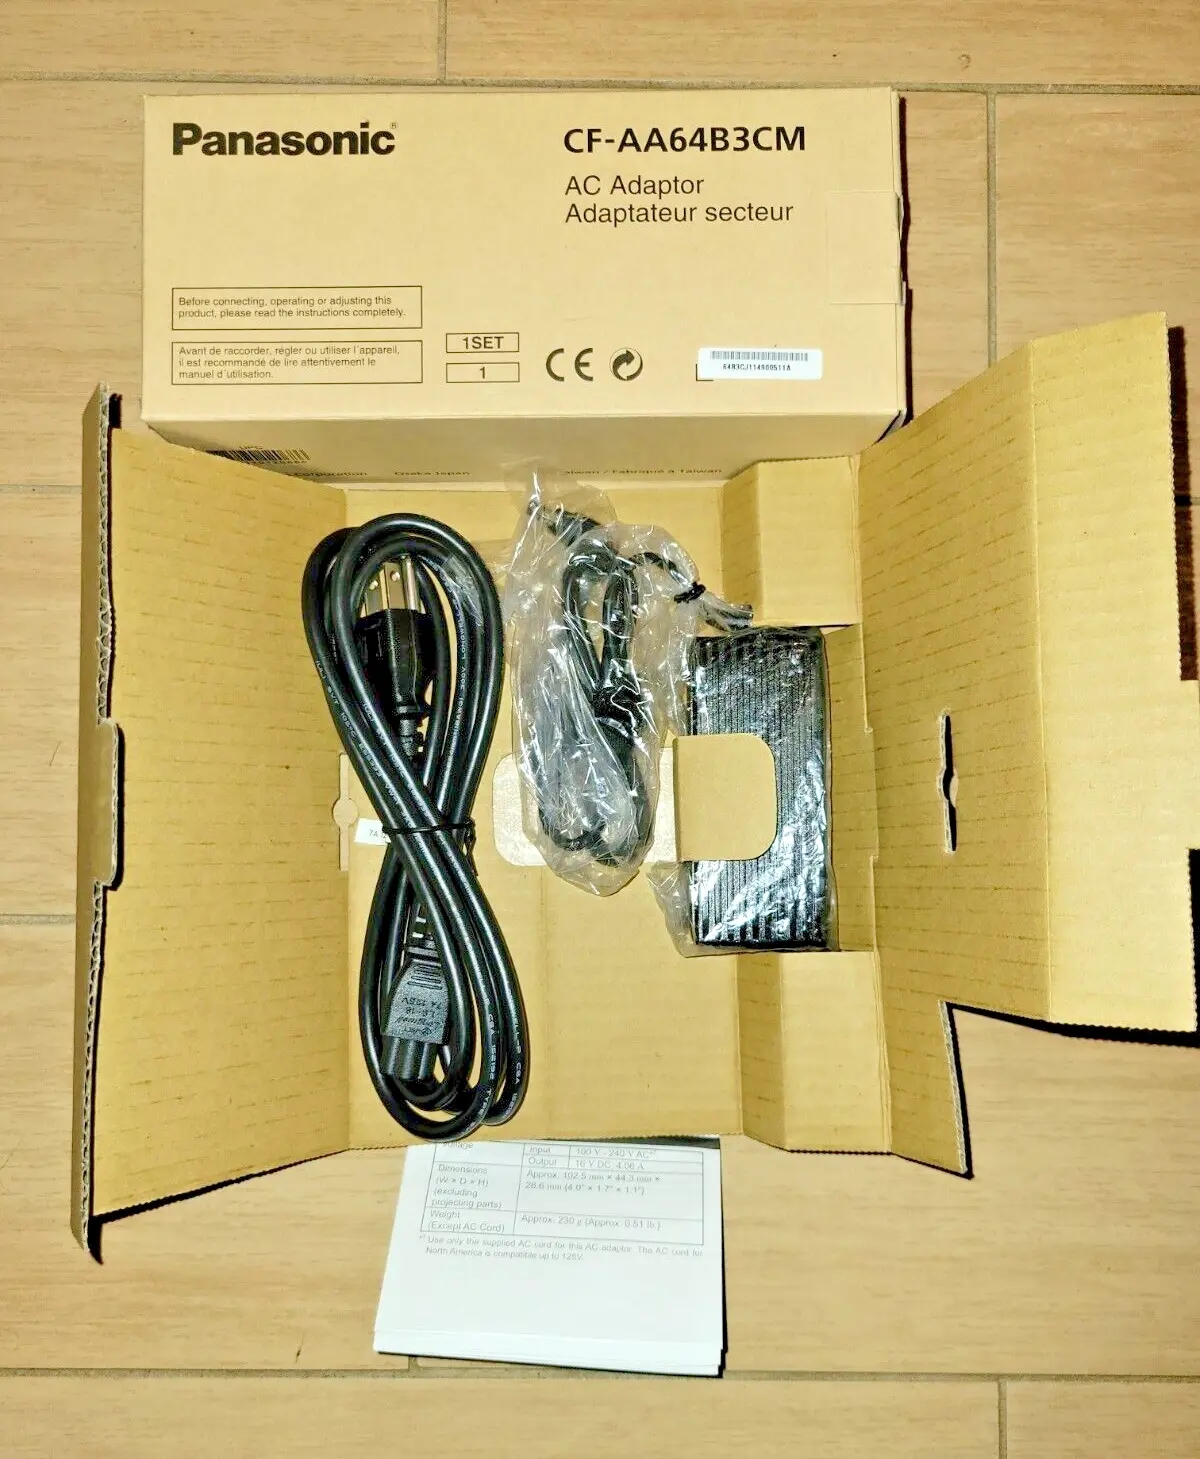 *Brand NEW*Original Panasonic CF-AA64B3CM 16V 4.06A AC/DC Adaptor Charger Power Supply - Click Image to Close